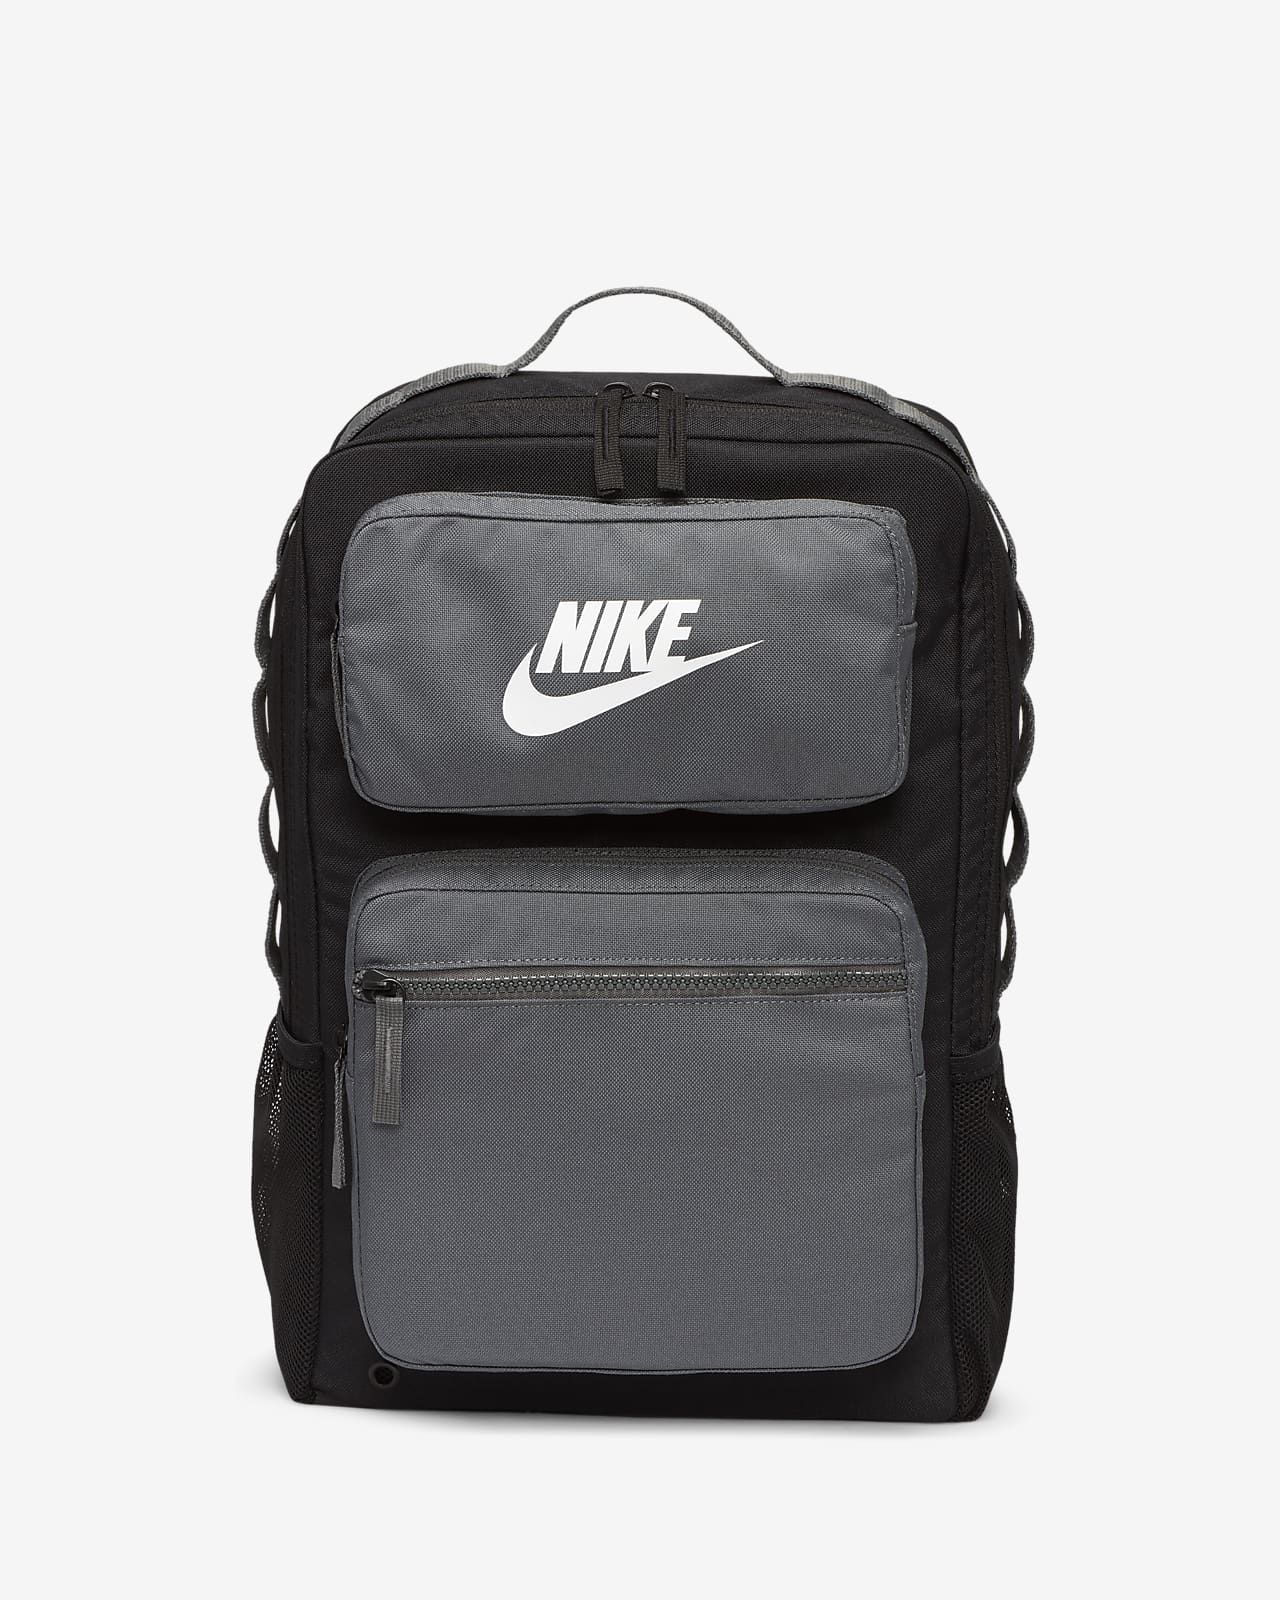 nike backpack laptop bag